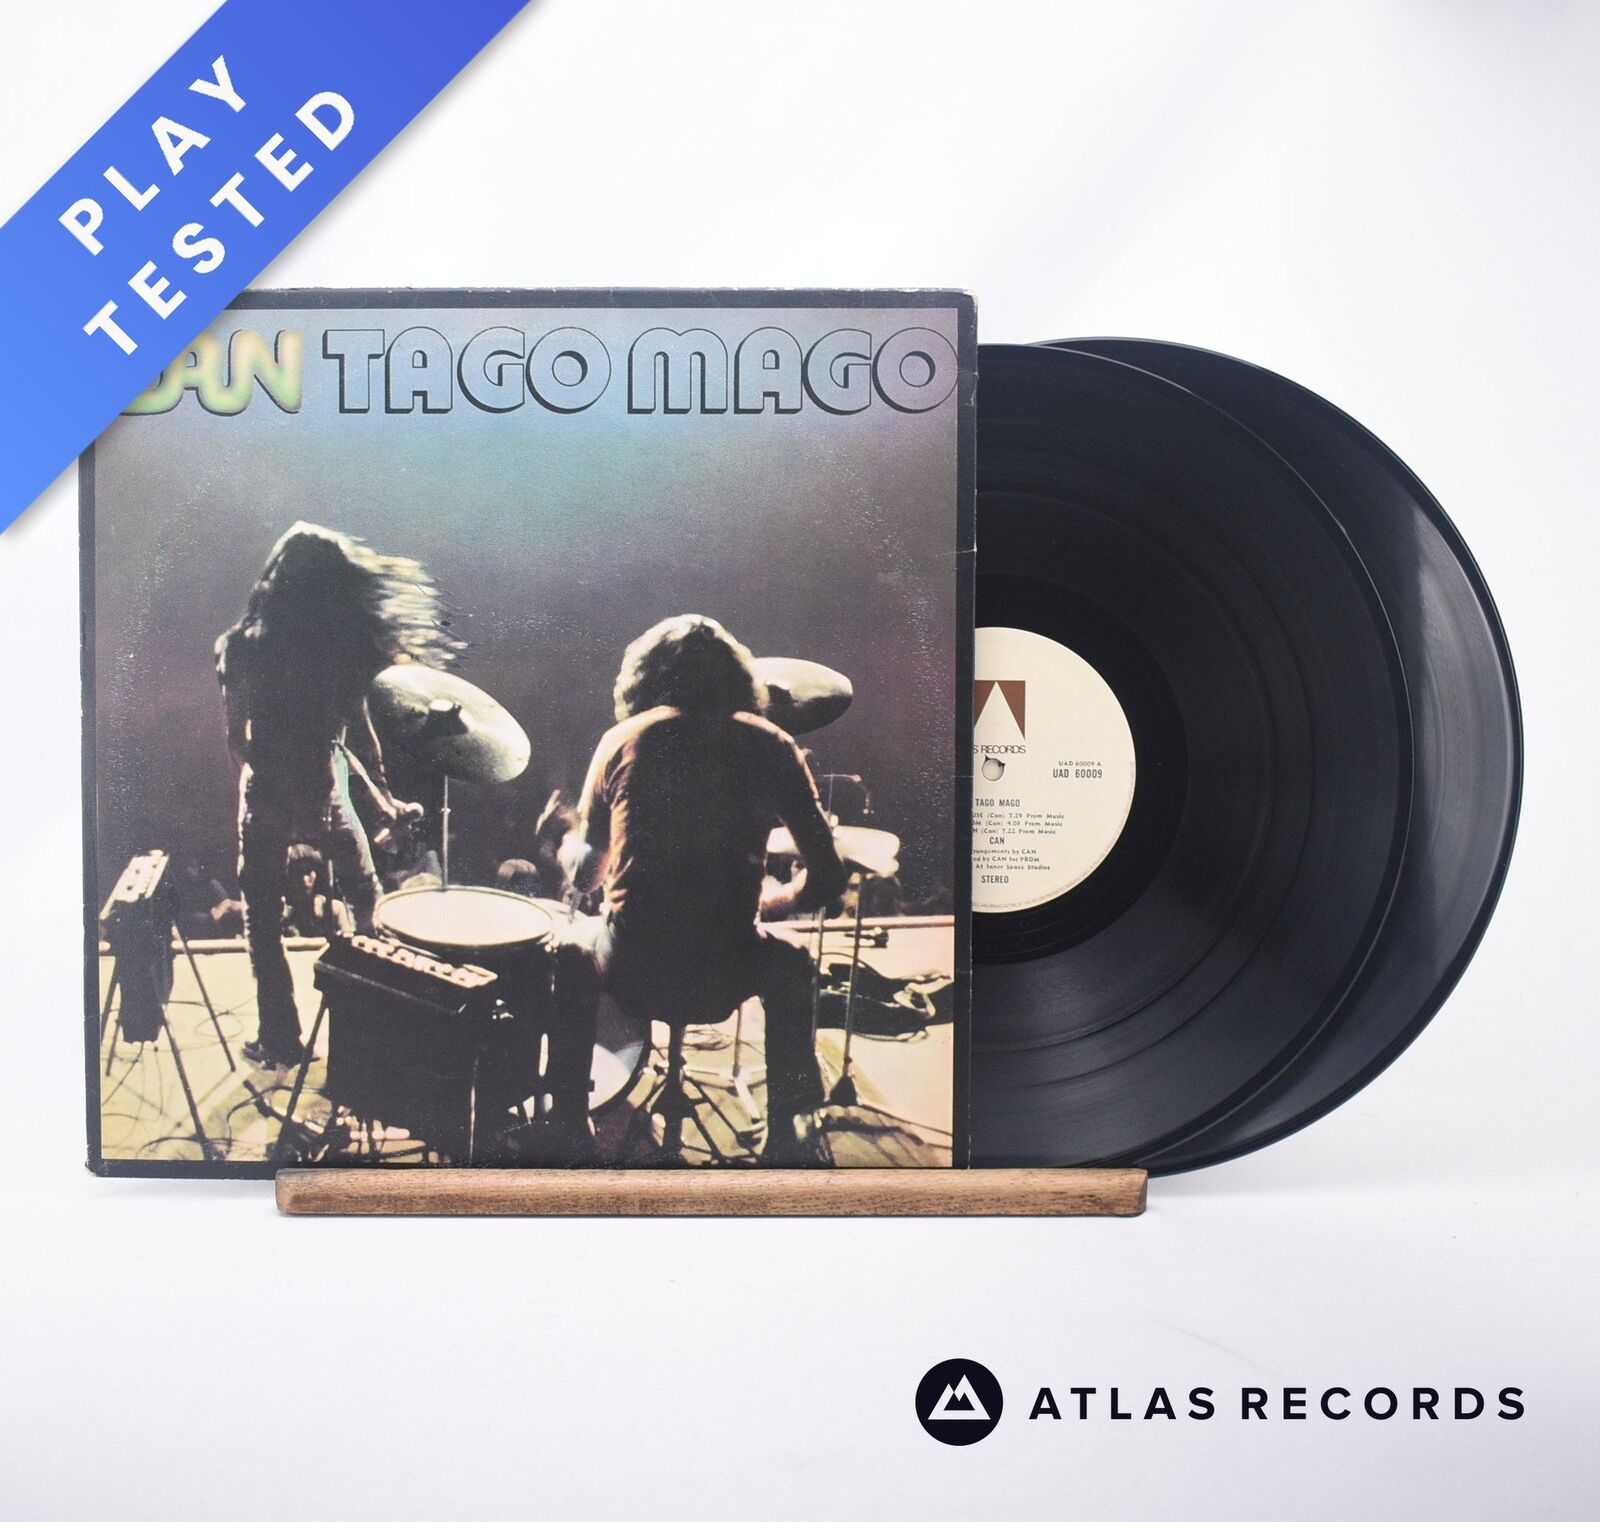 Can - Tago Mago - Double LP Vinyl Record - VG+/EX